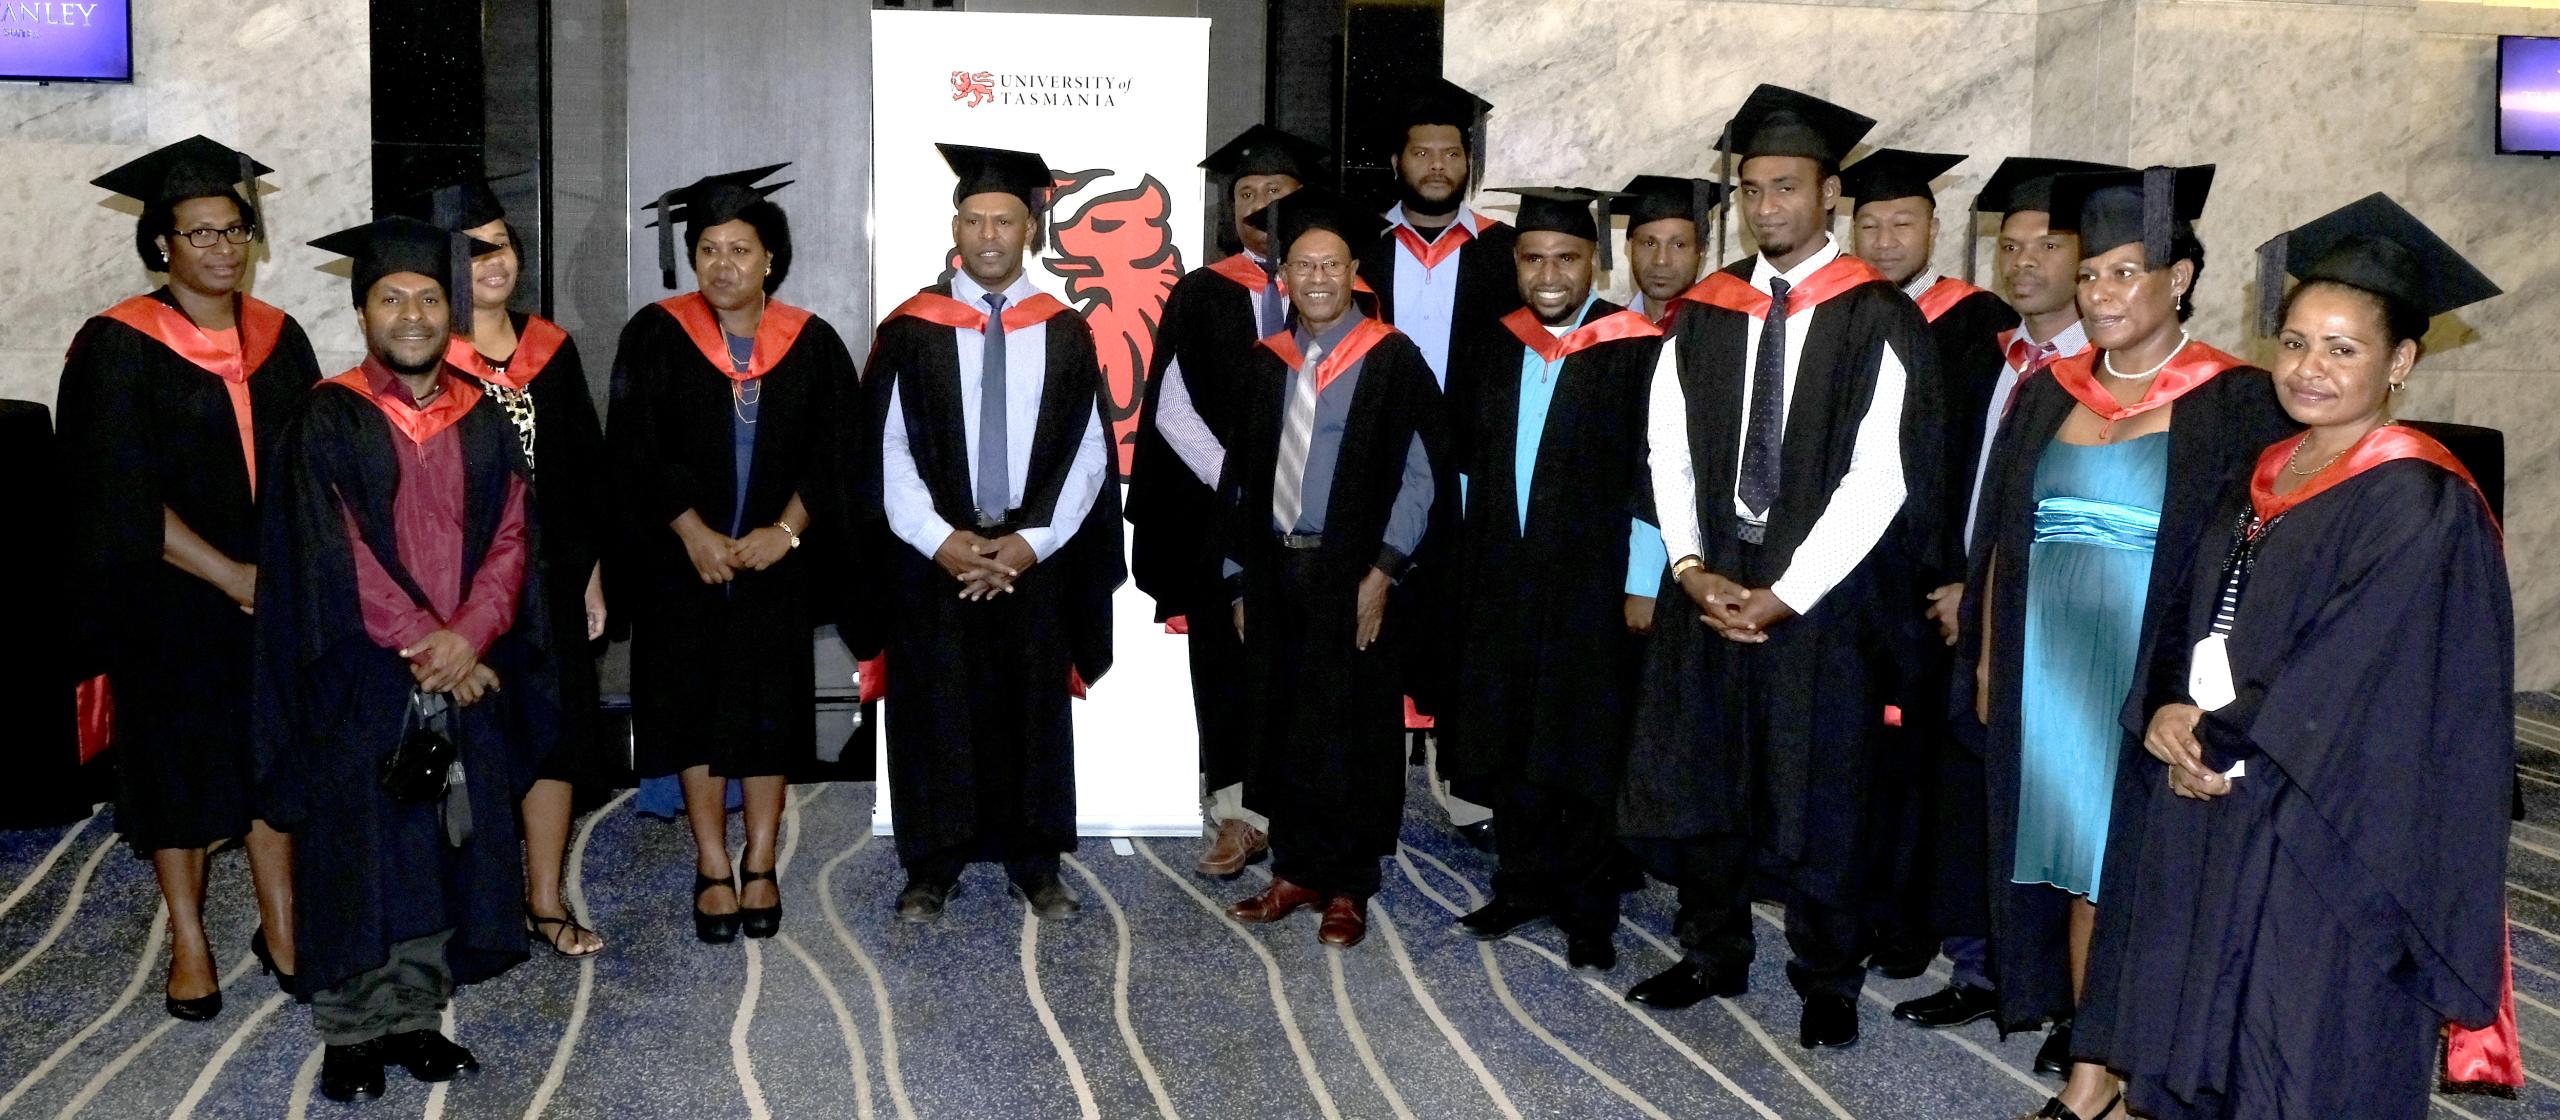 University of Tasmania research graduates